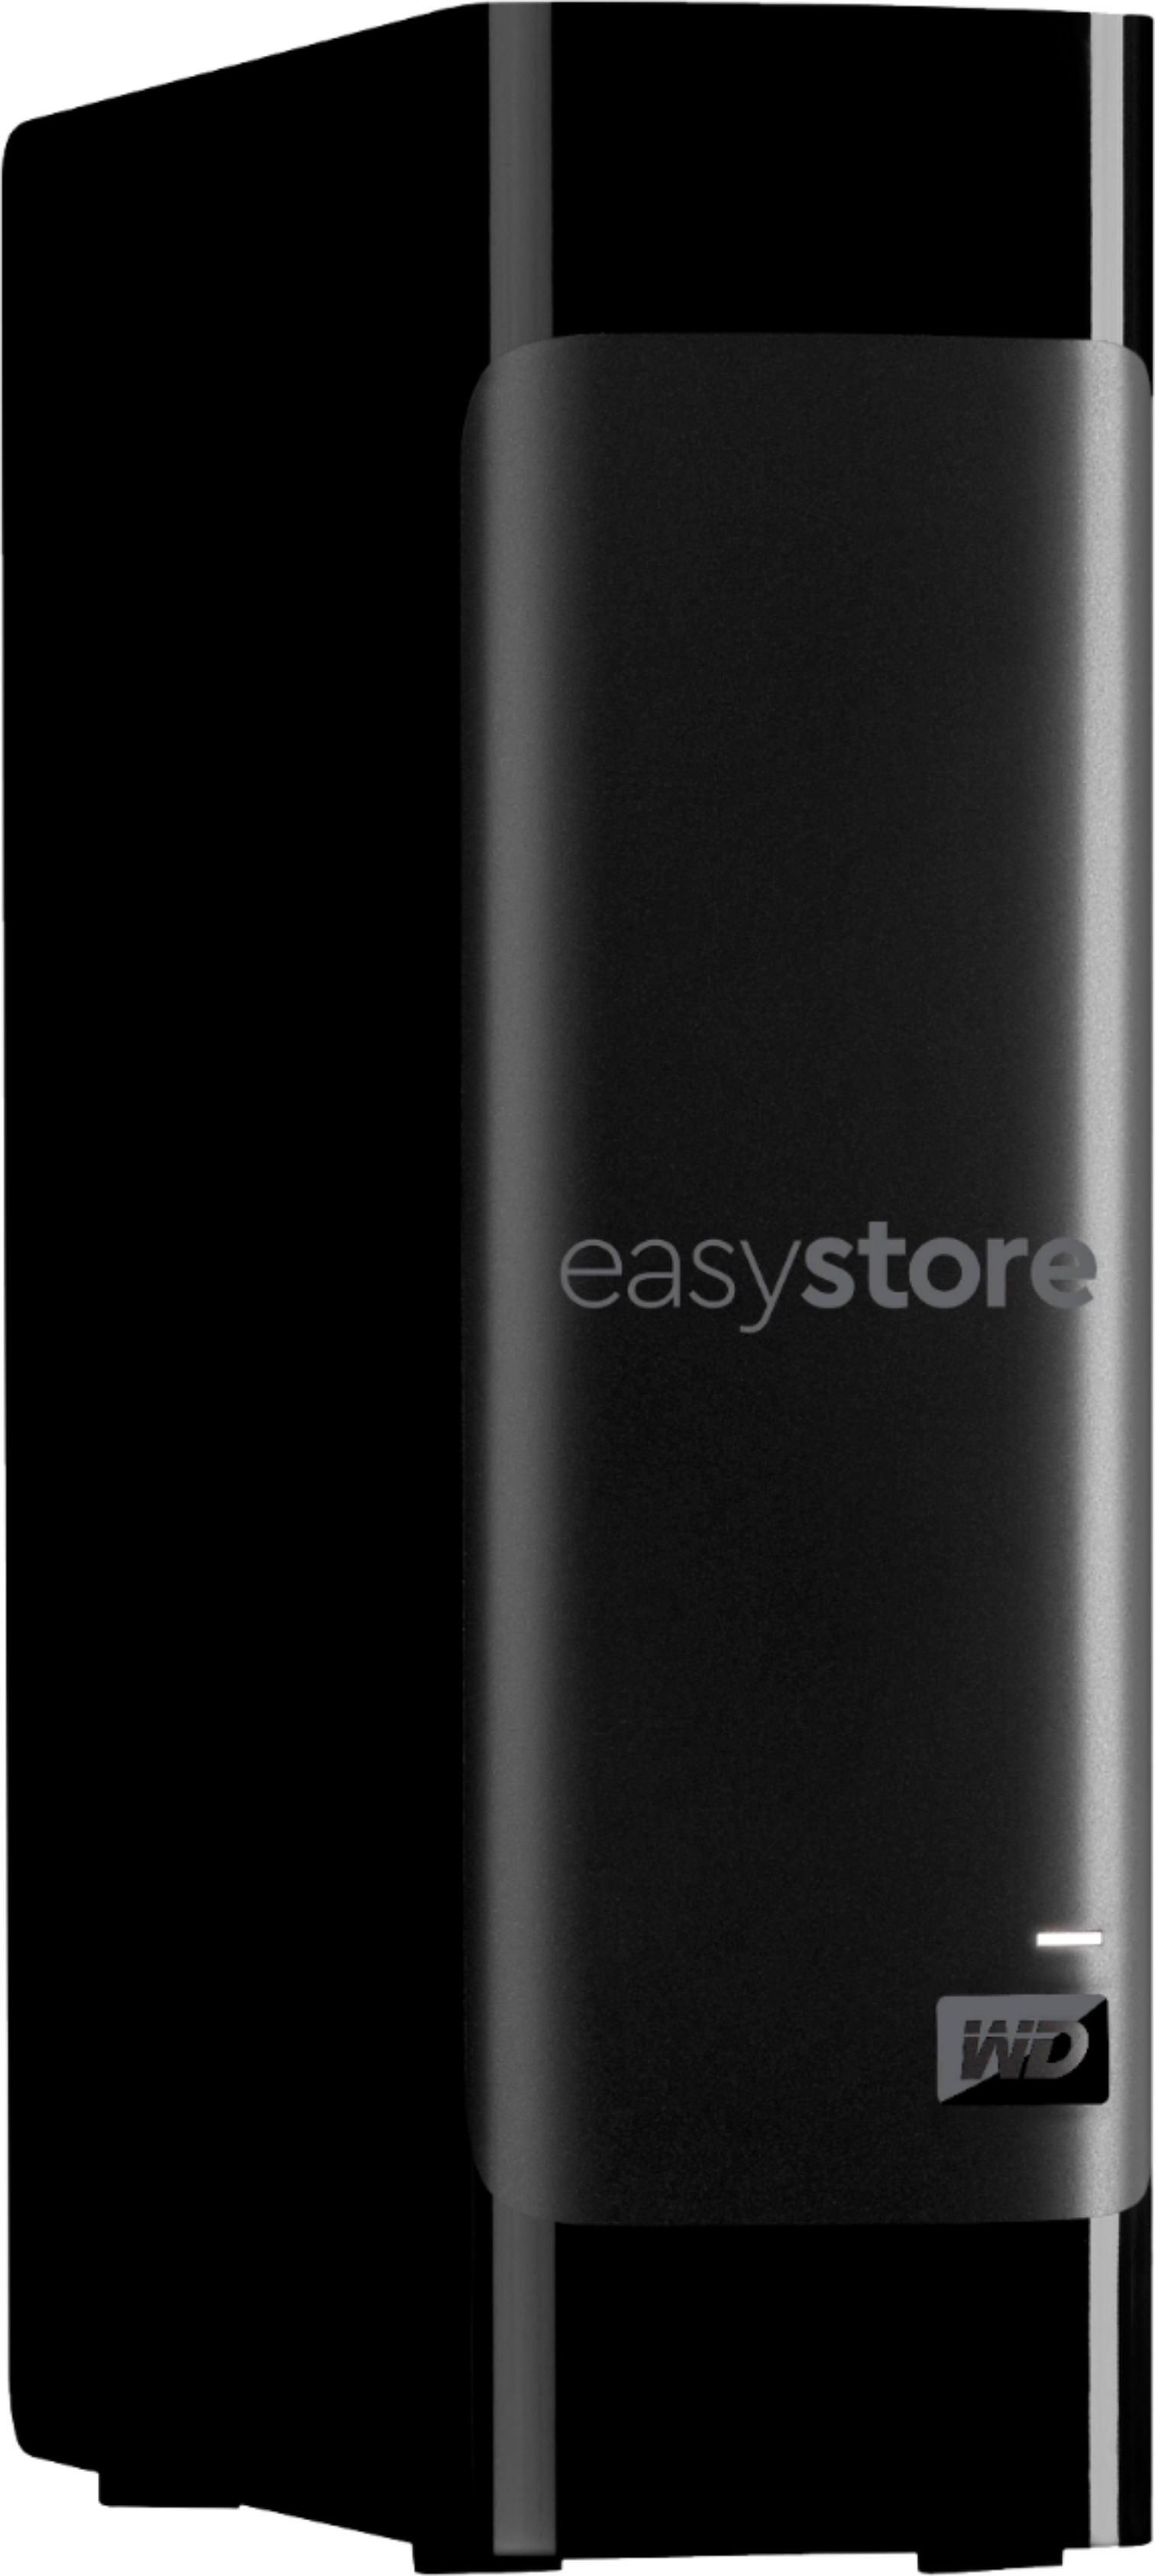 WD easystore 14TB External USB 3.0 Hard Drive Black WDBAMA0140HBK-NESN -  Best Buy